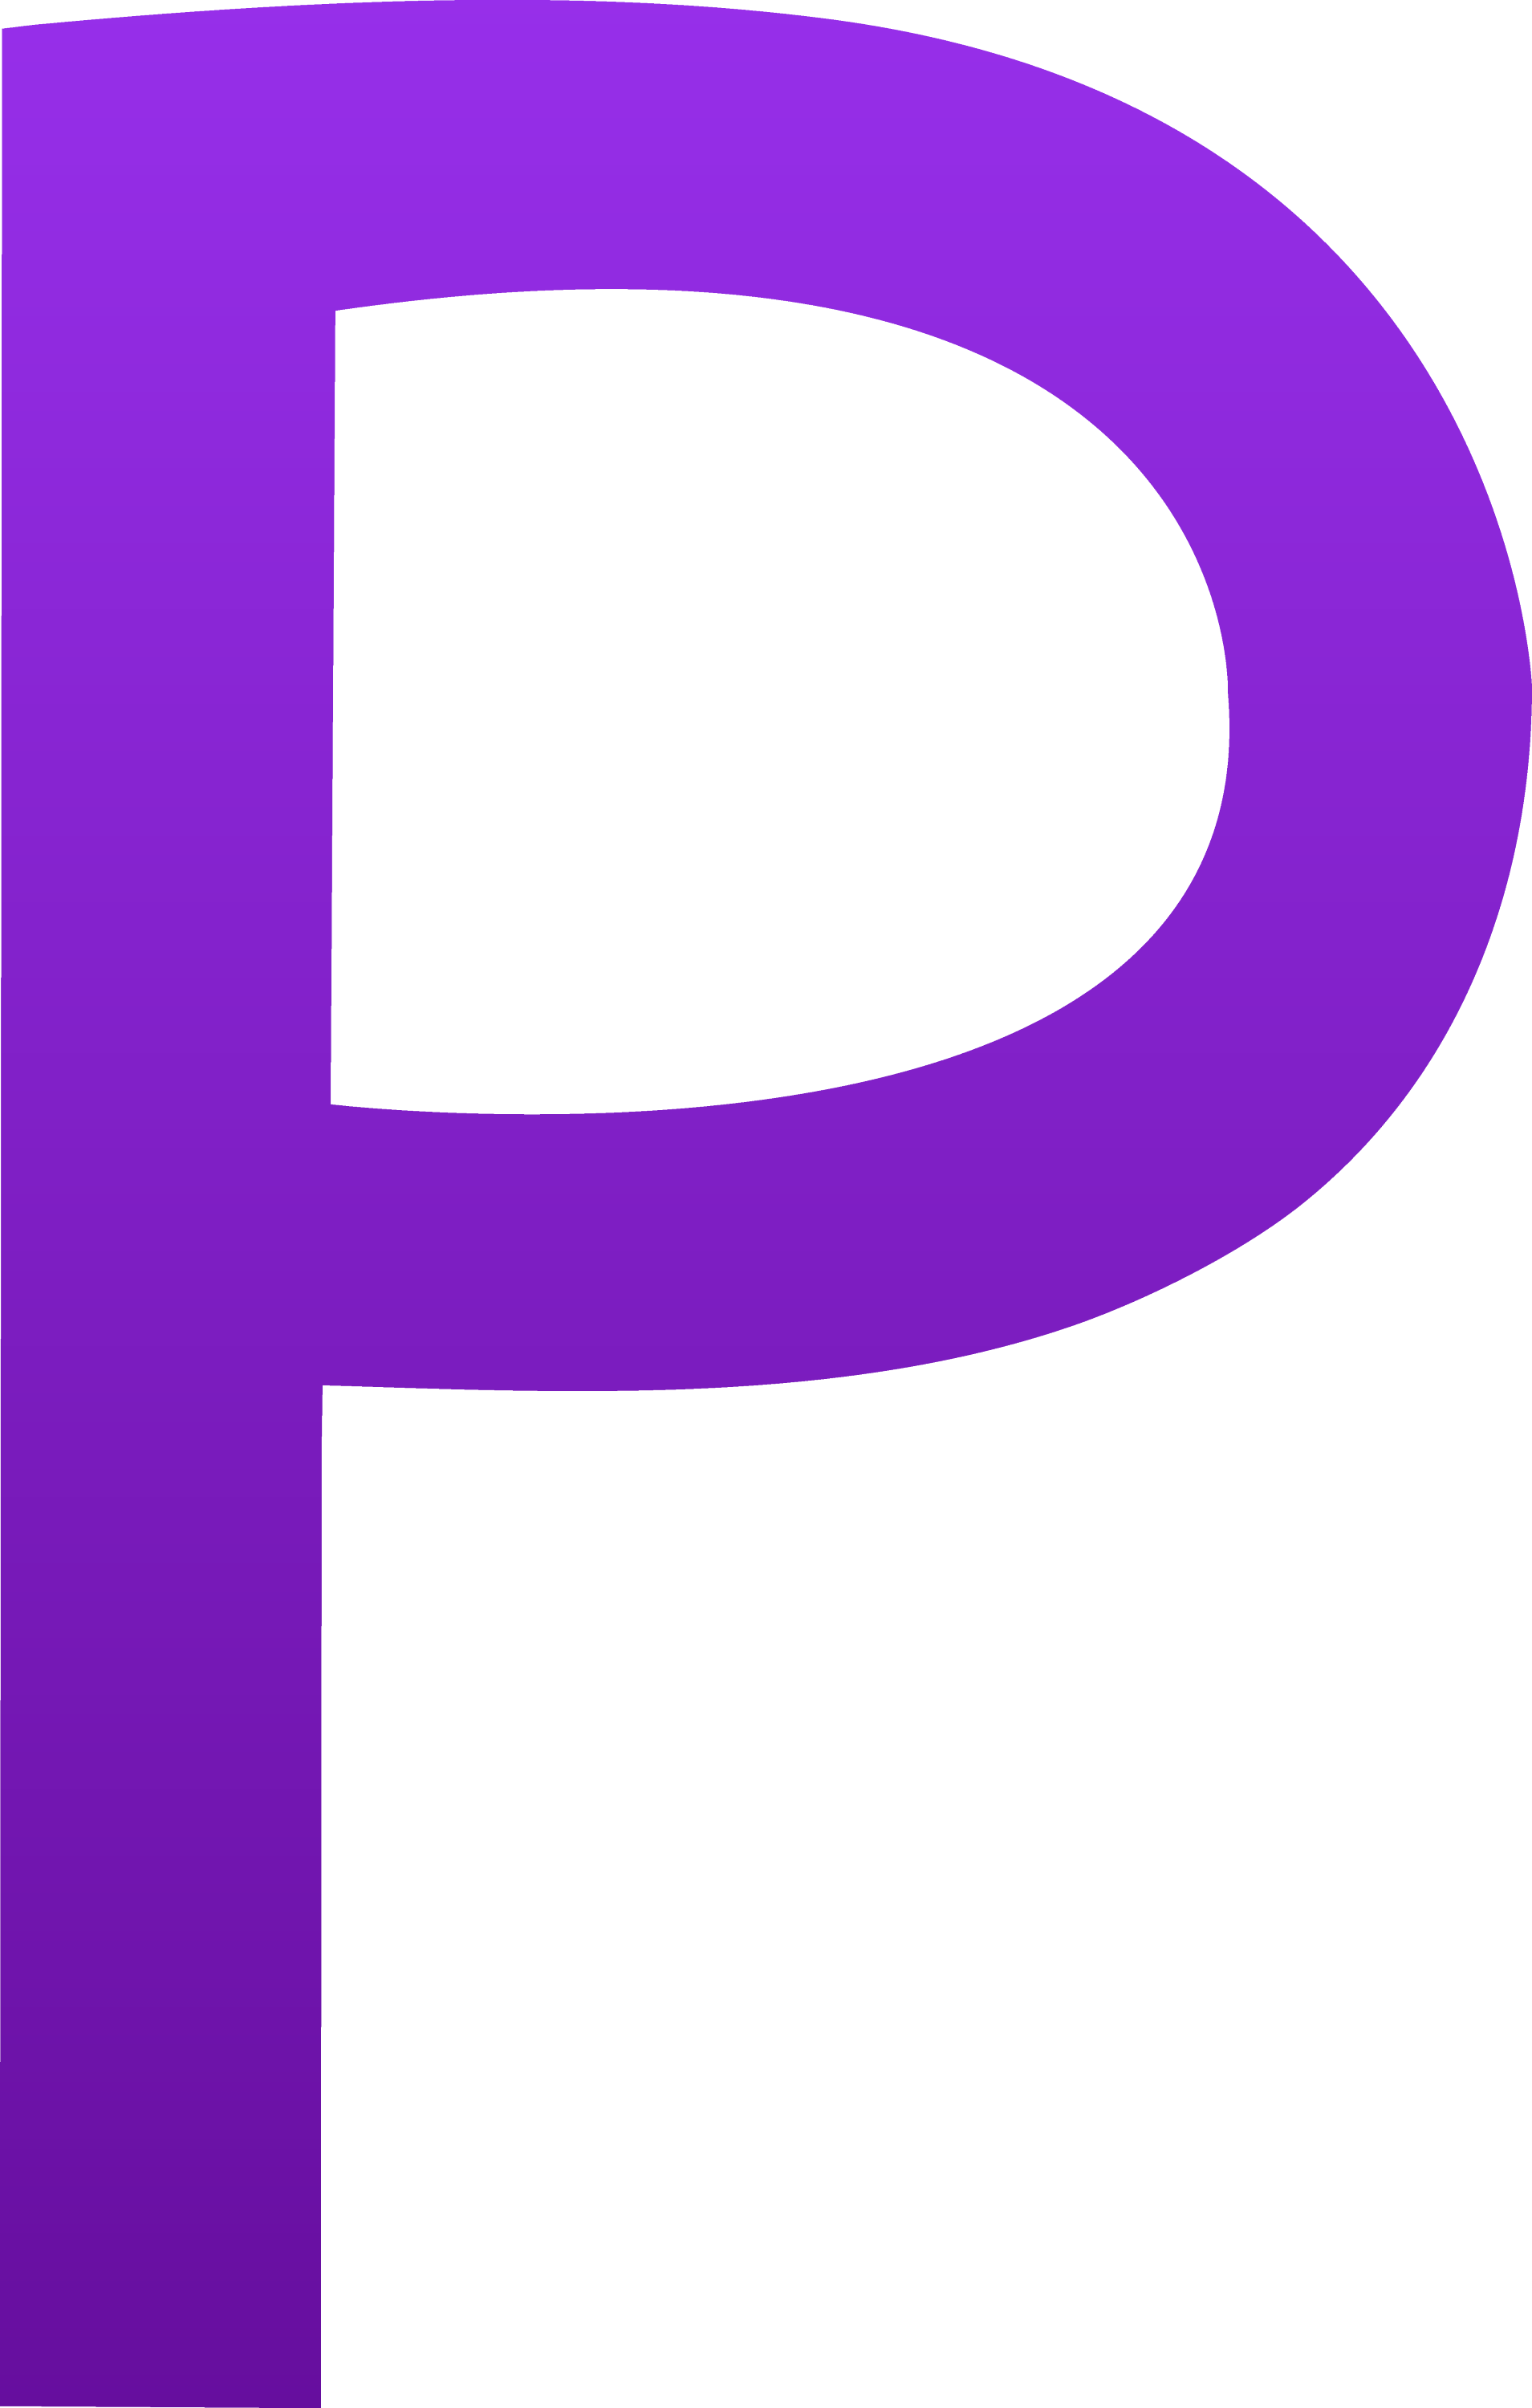 The Letter P Free Clip Art